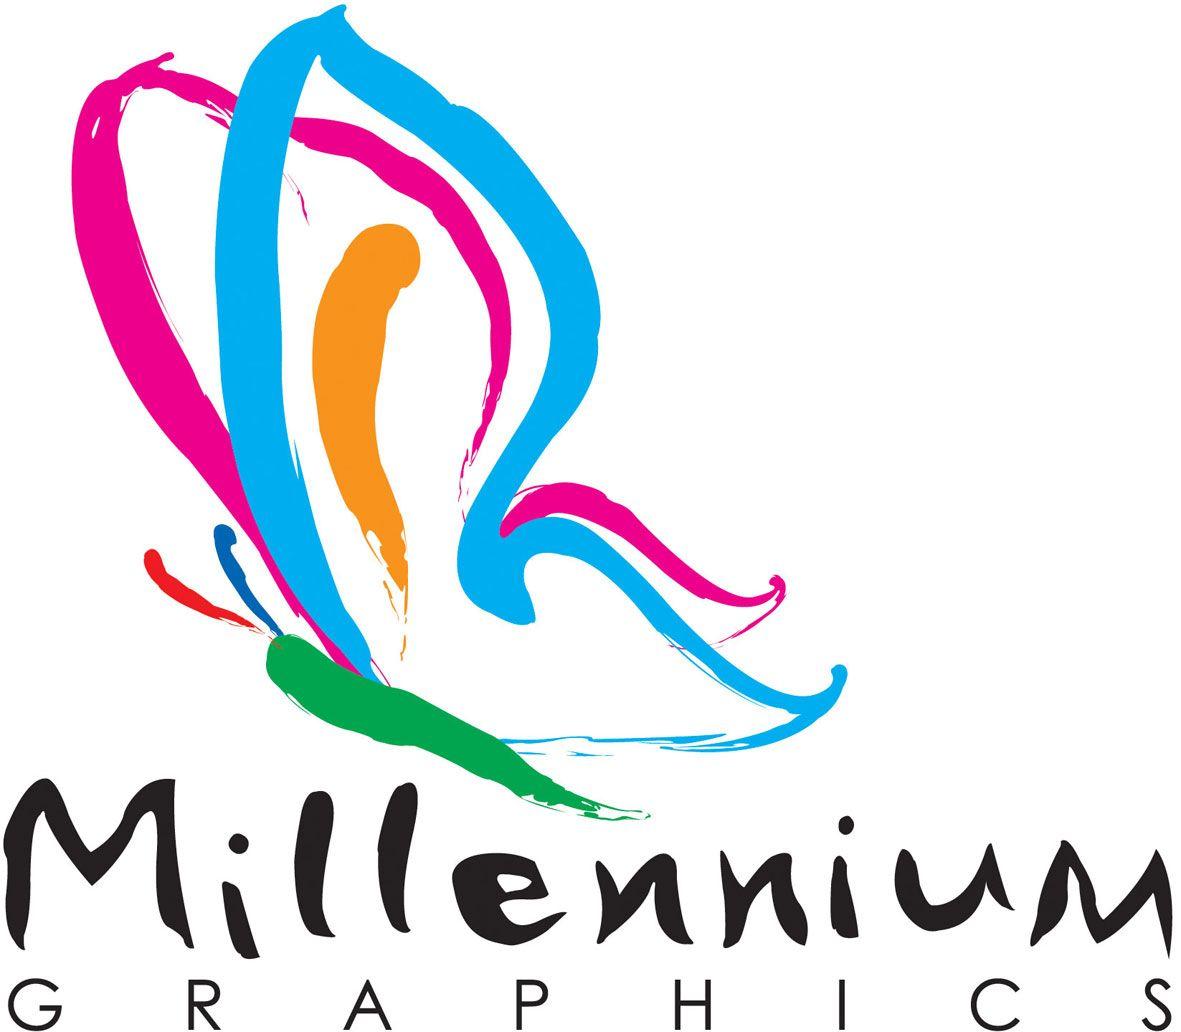 Graphicz Logo - Graphics Logo Image Picture